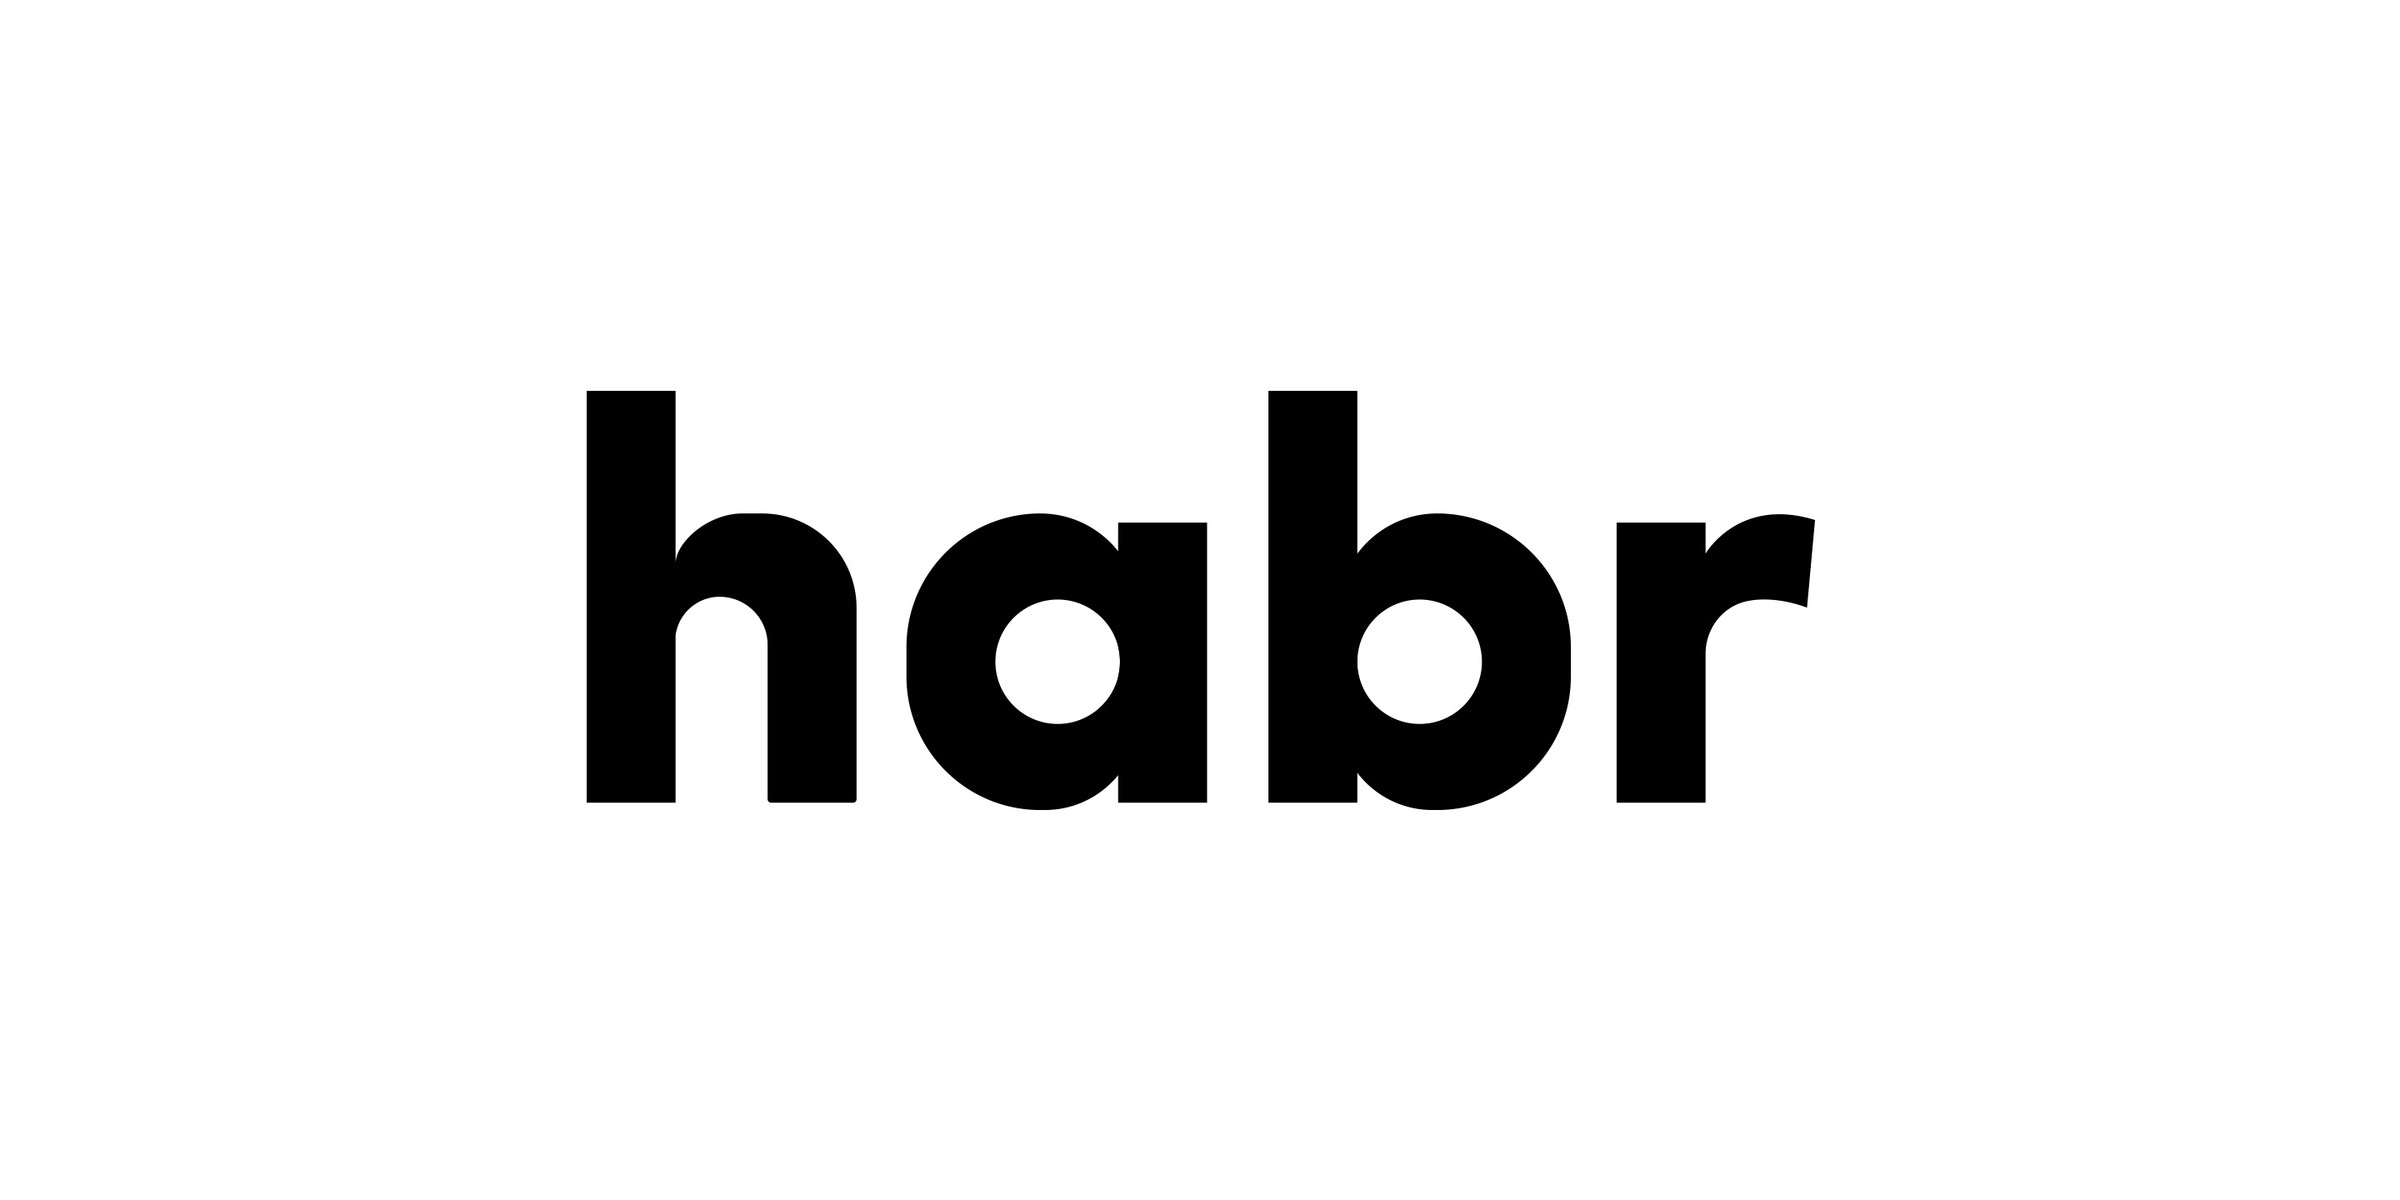 Https habr com company. Habr лого. Иконка Хабра. Habr career логотип. Логотип habr без фона.